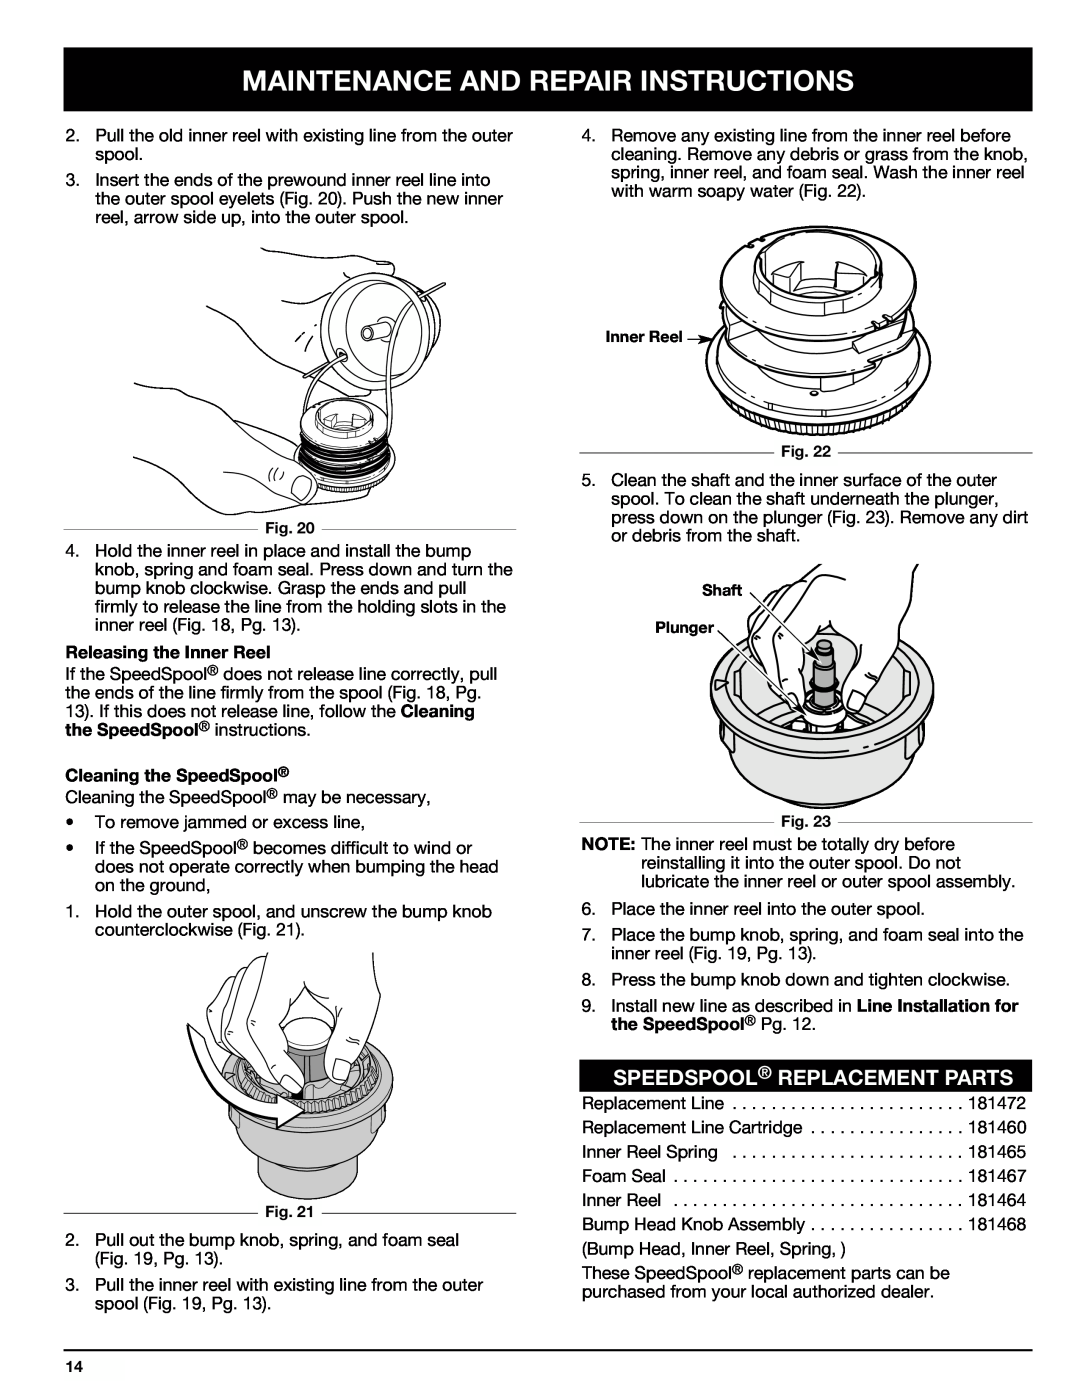 Ryobi 767rj manual Speedspool Replacement Parts, Maintenance And Repair Instructions, Releasing the Inner Reel 